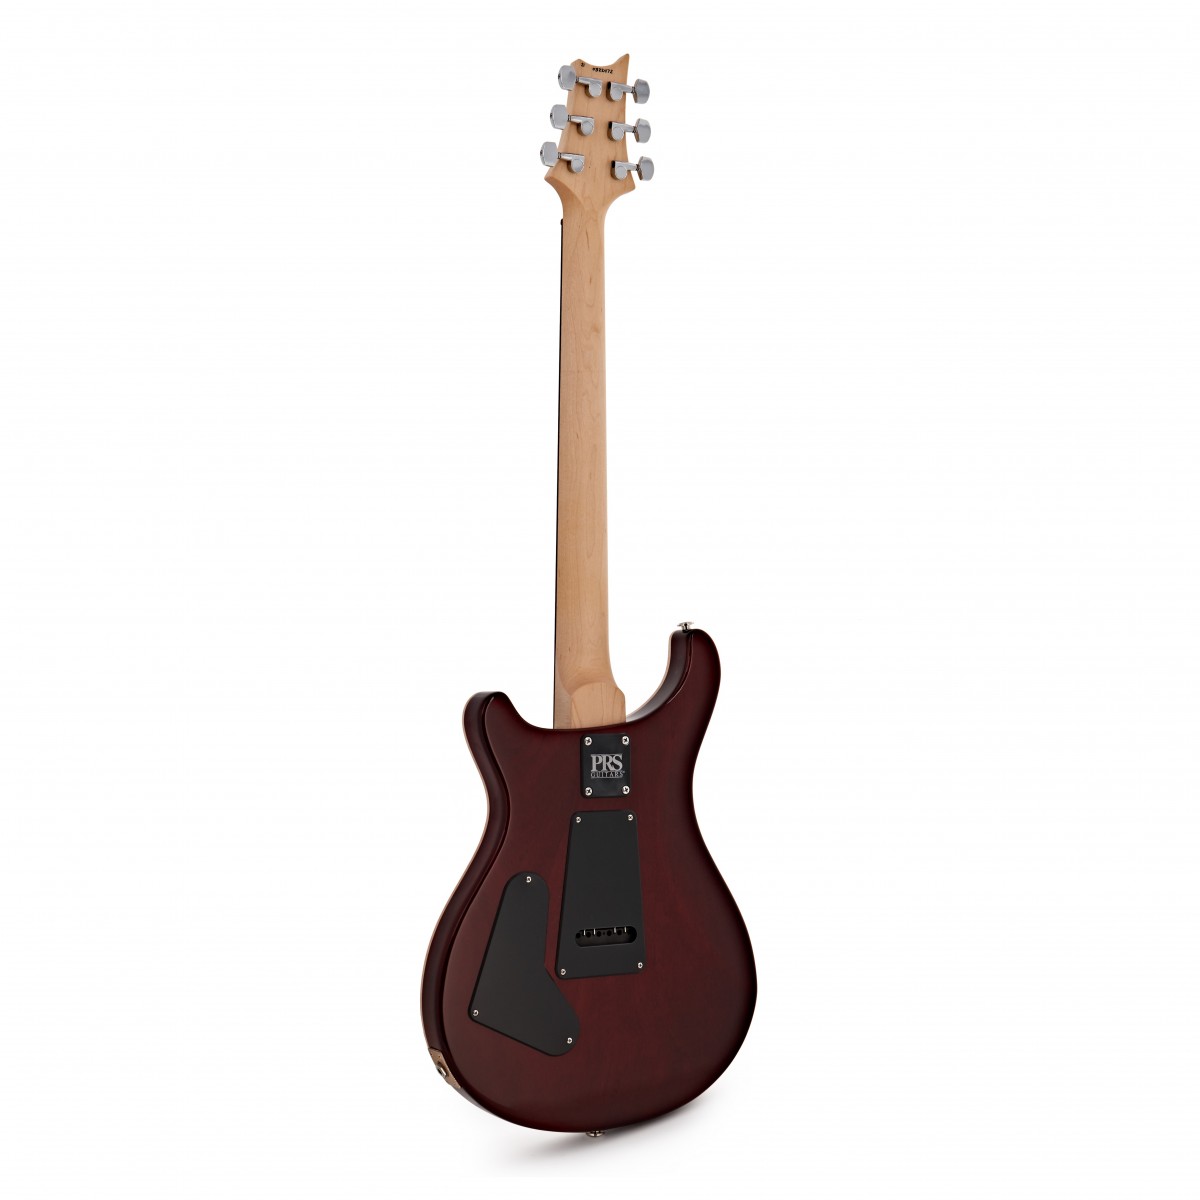 Prs Ce 24 Bolt-on Usa Hh Trem Rw - Fire Red Burst - Guitarra eléctrica de doble corte - Variation 1